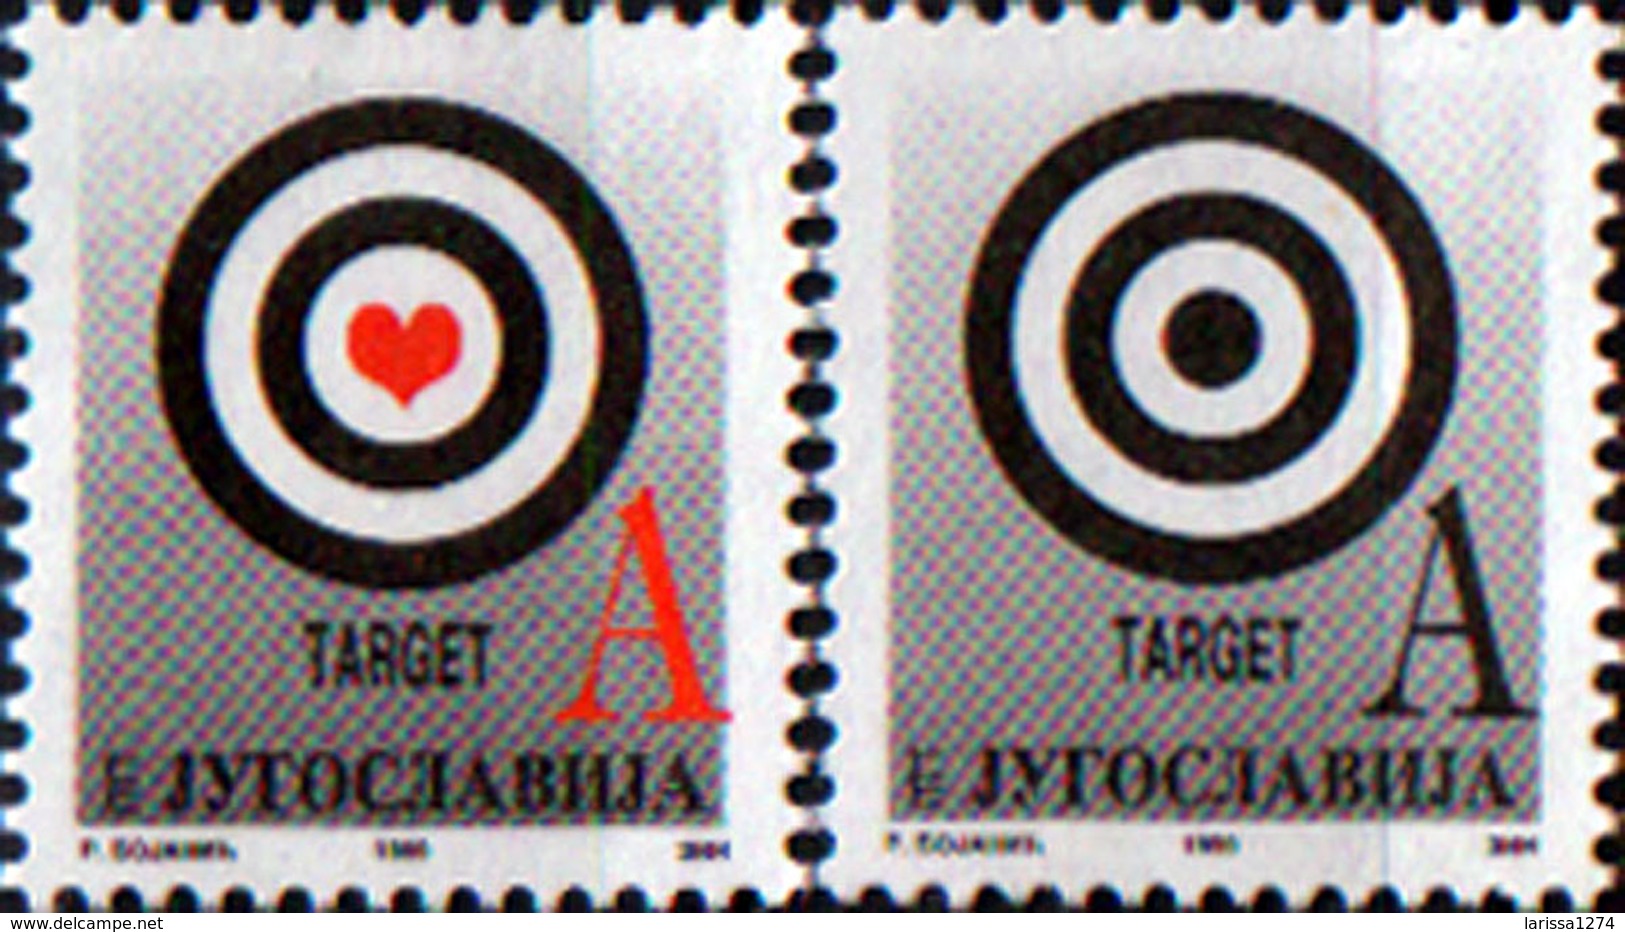 YUGOSLAVIA 1999 Definitive Target Face Value “A” Set MNH - Años Completos